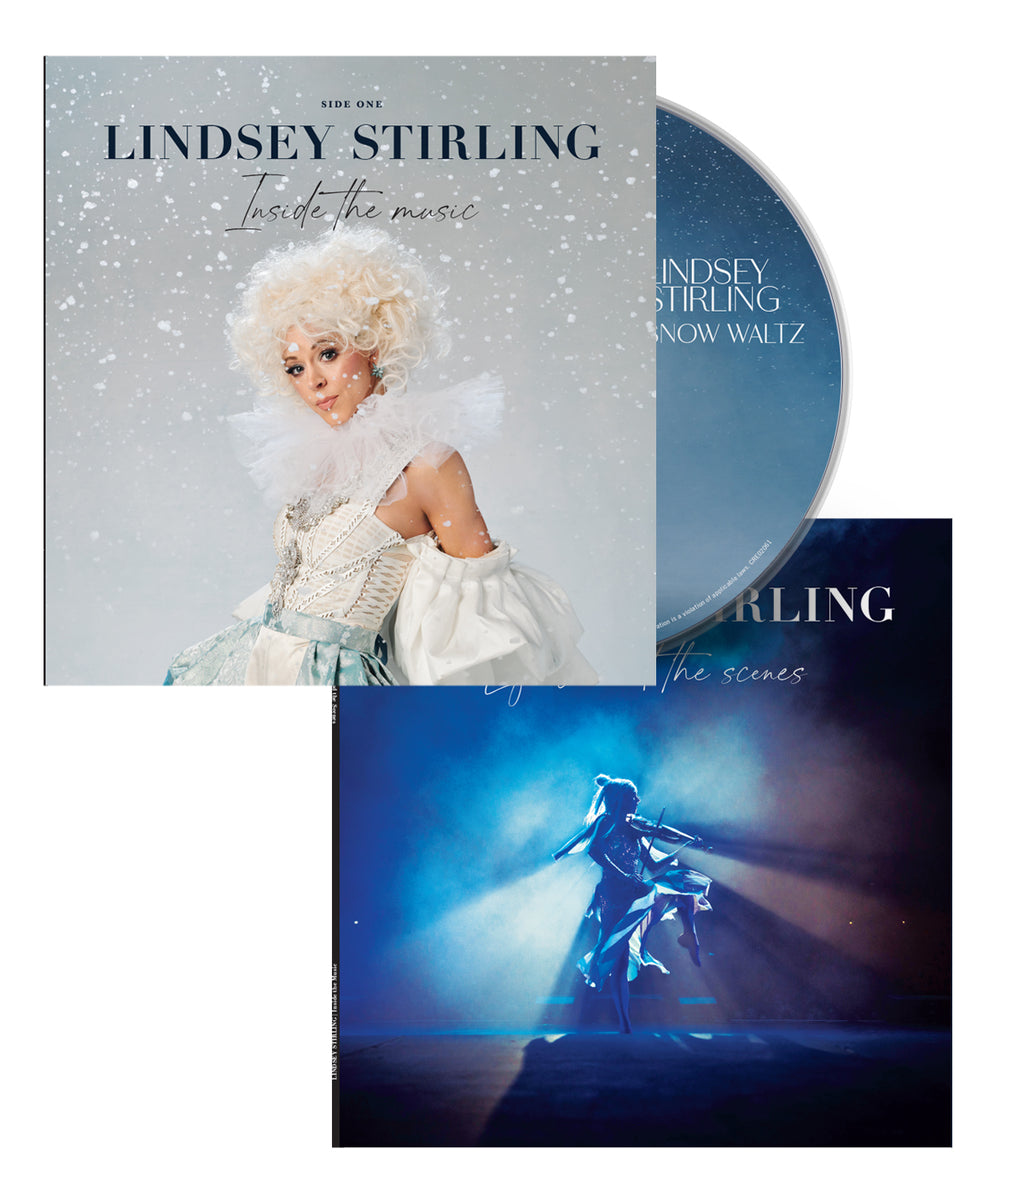 Snow Waltz – Lindsey Stirling